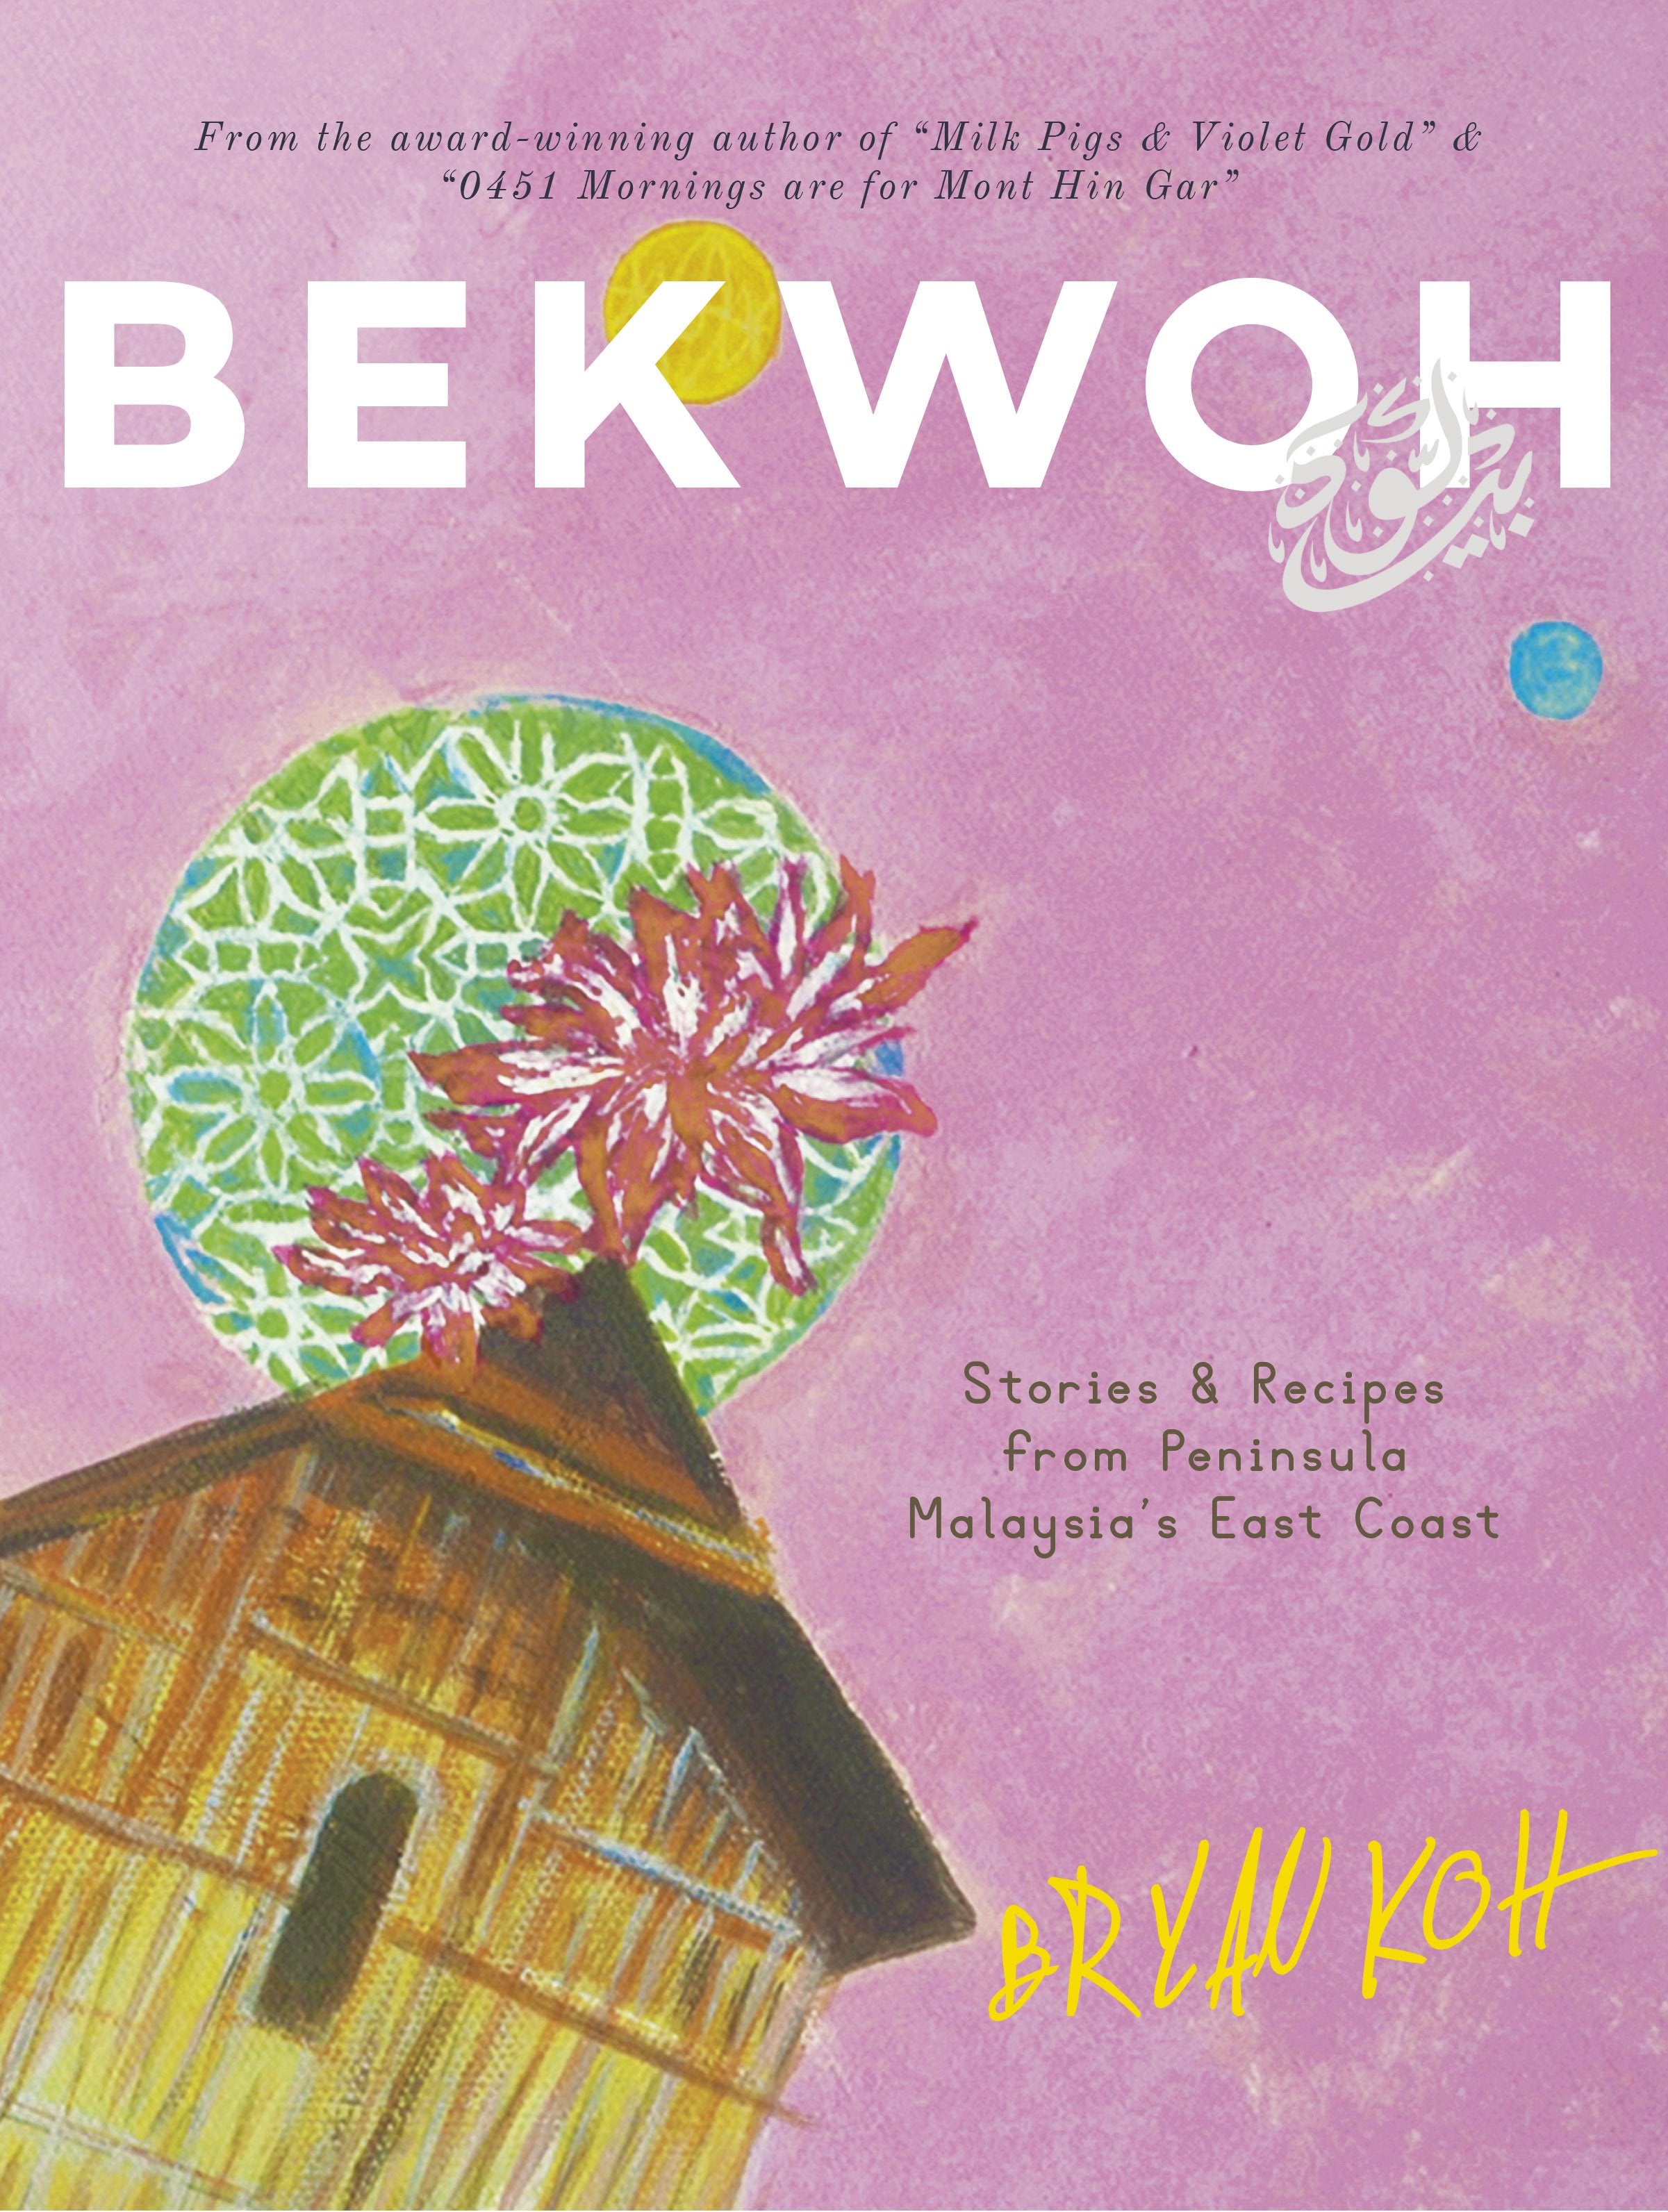 BEKWOH: Stories & Recipes from Peninsula Malaysia’s East Coast